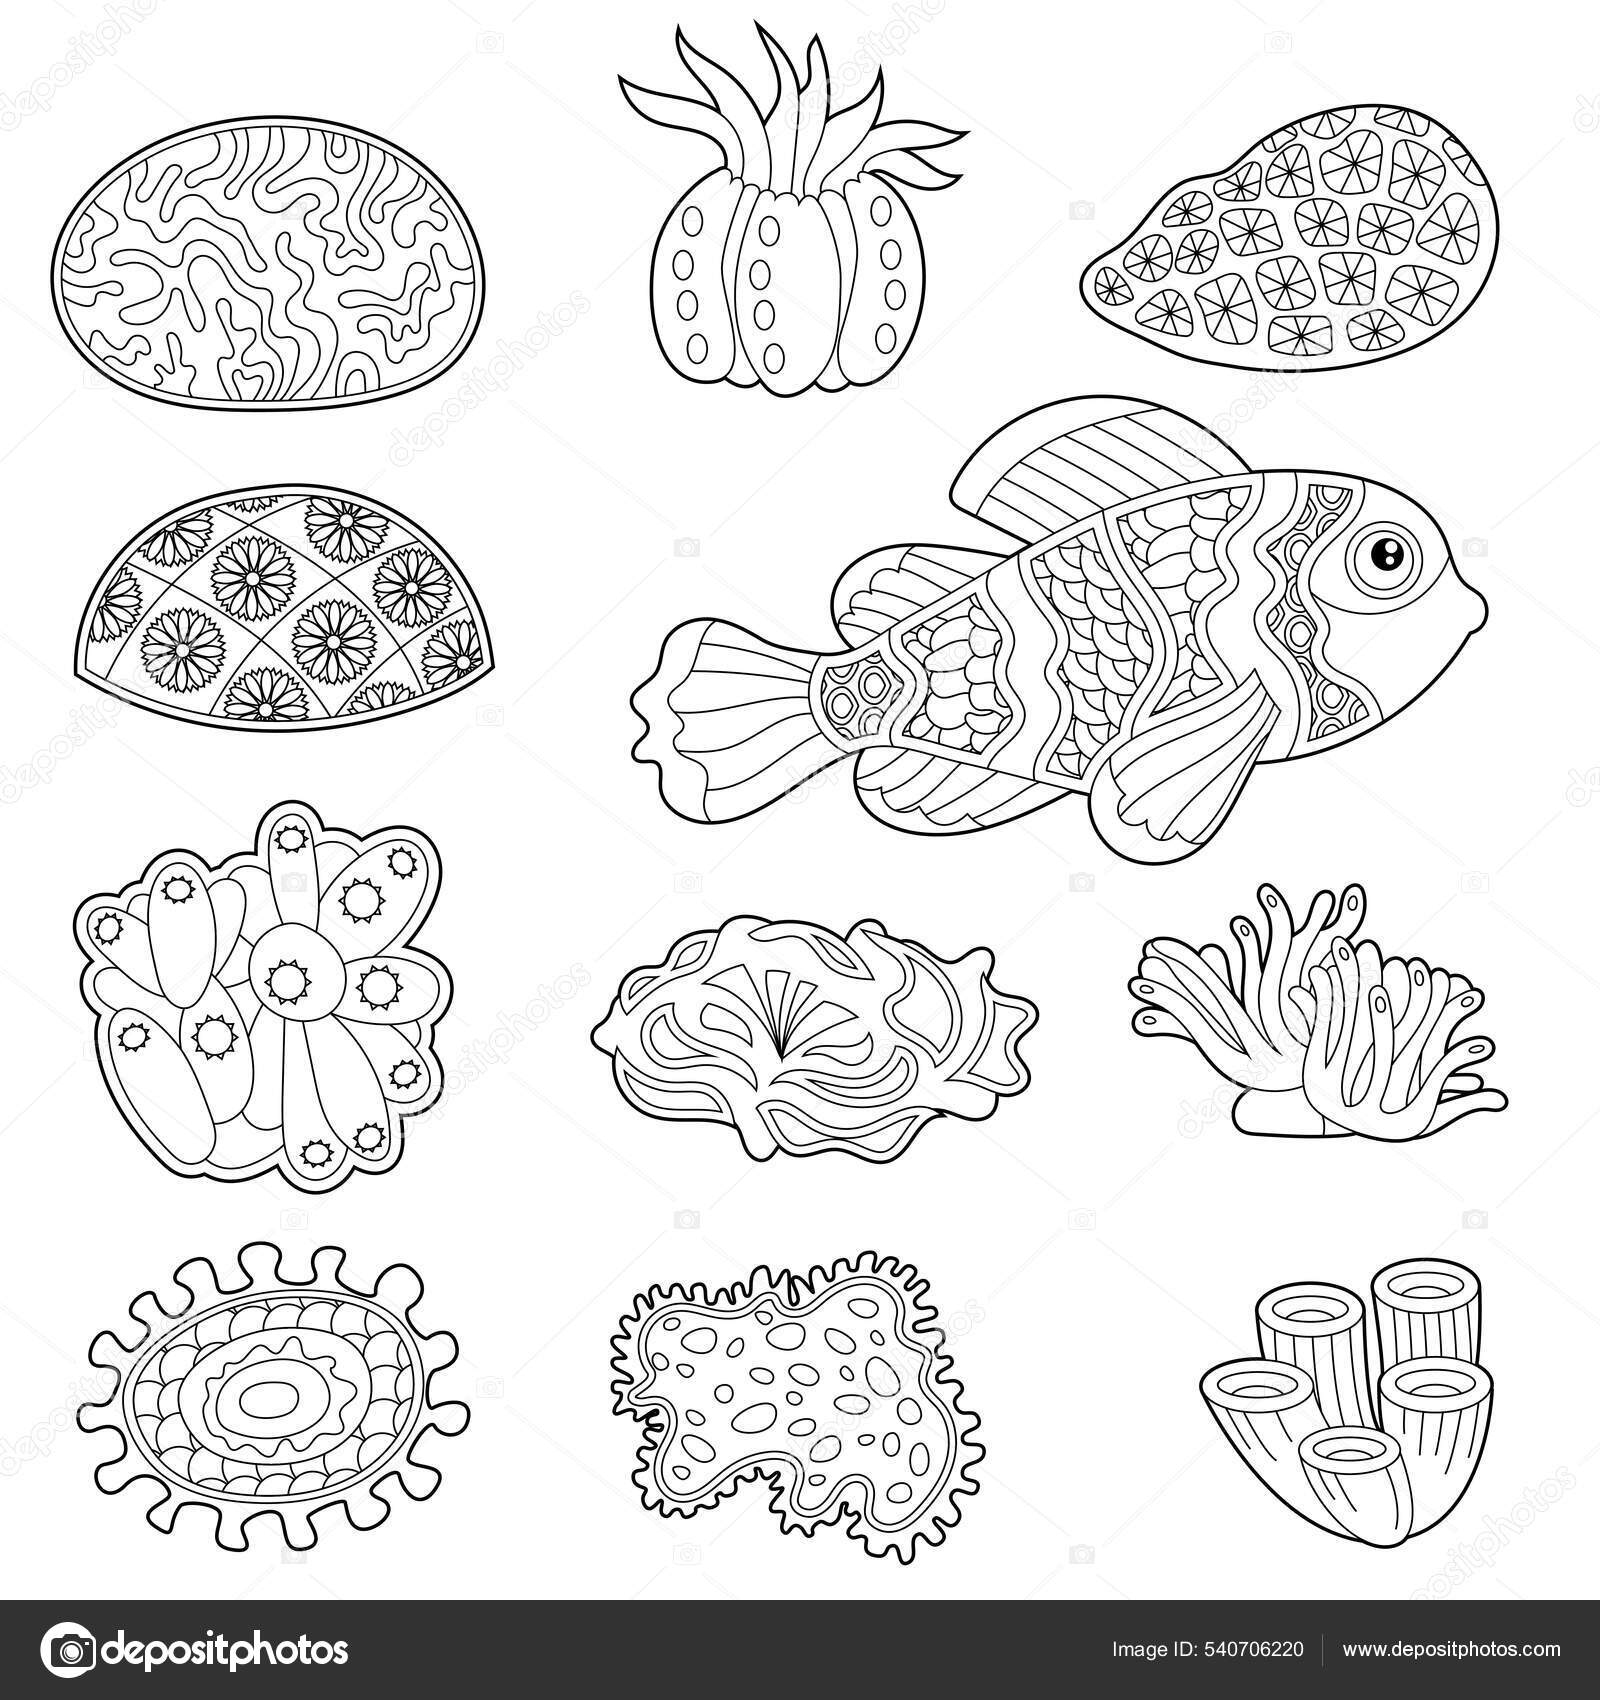 Adult coloring book bundle sea, fish, animals, beach, nature